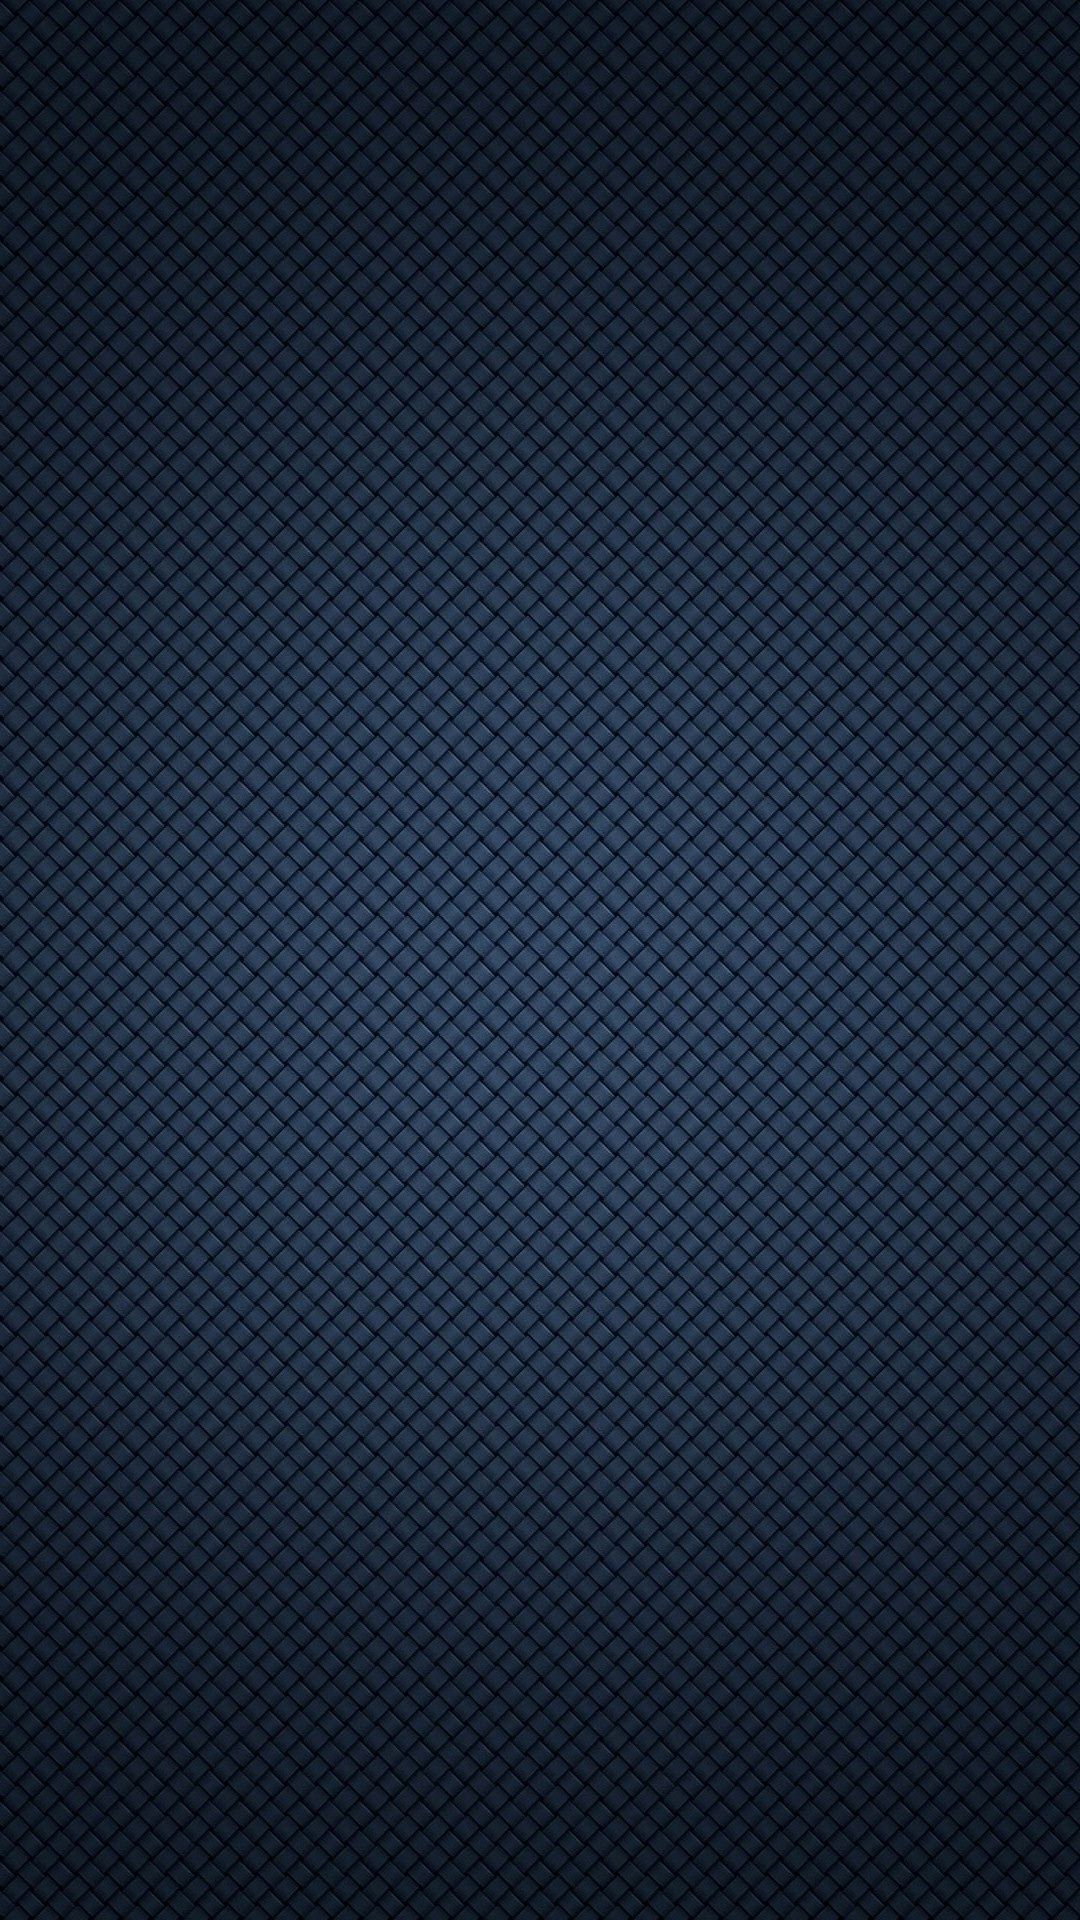 blue wallpaper iphone 6 Beautiful Blue iPhone 6 Plus inspiration